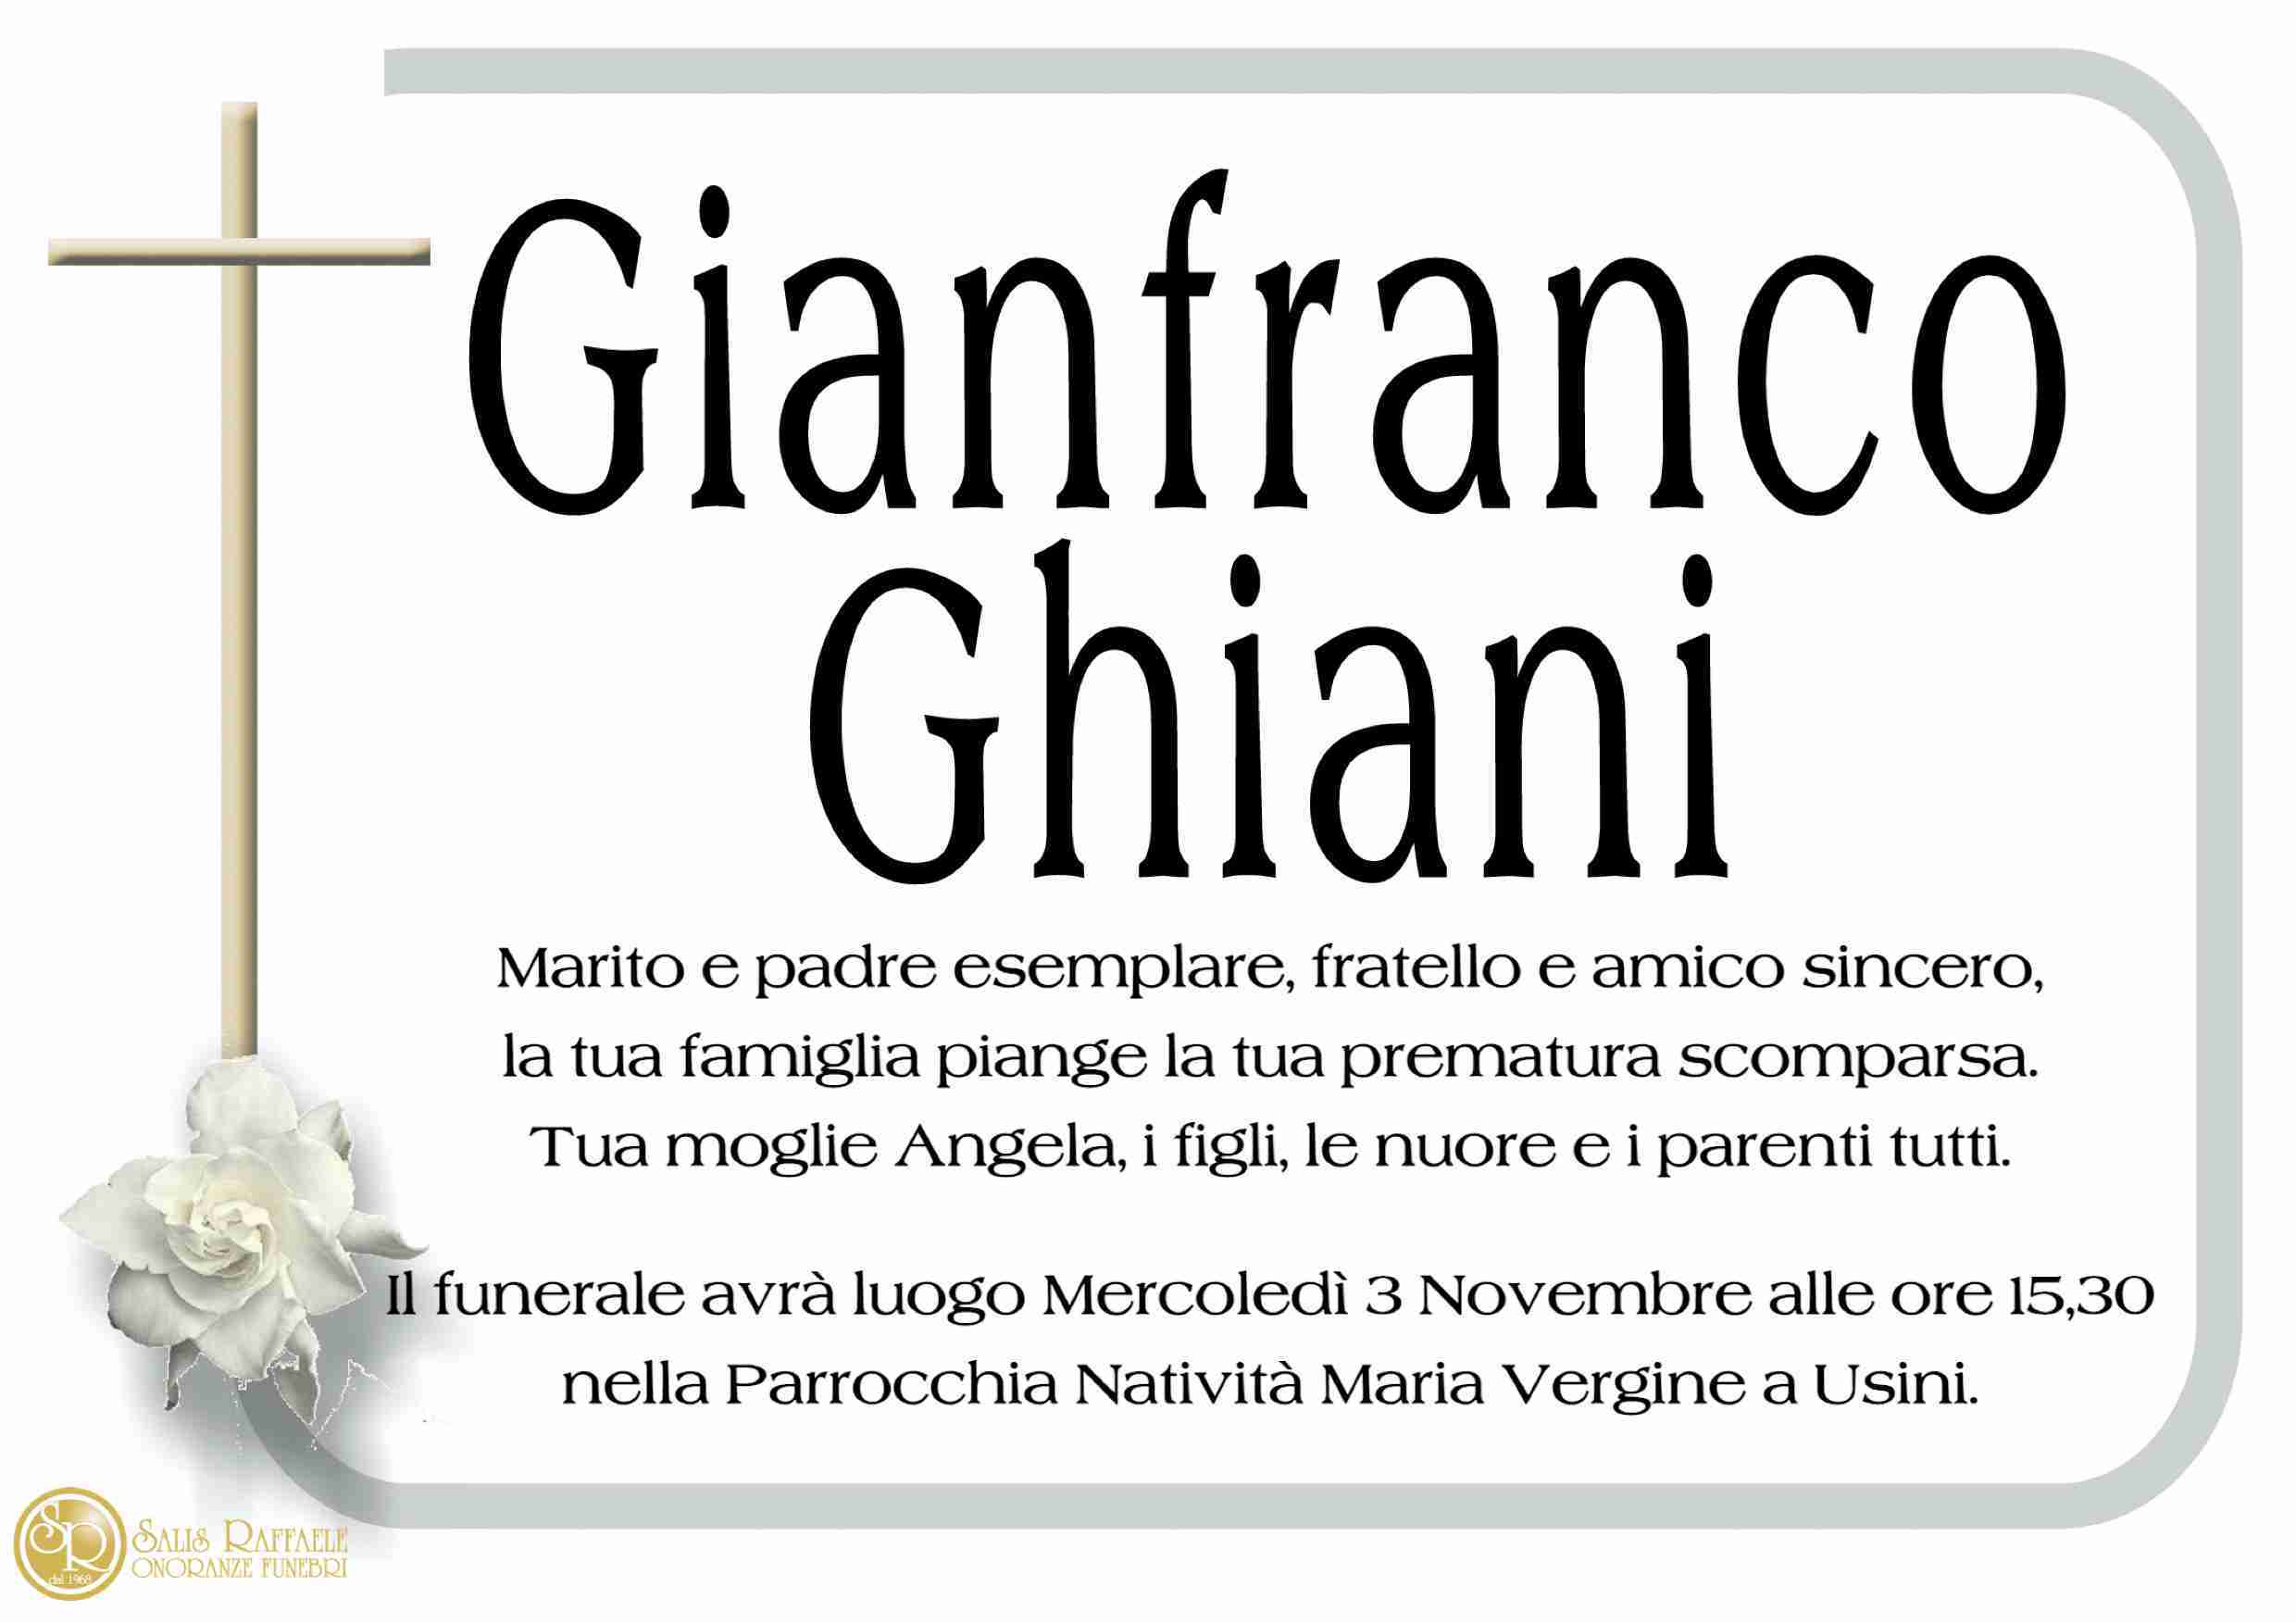 Gianfranco Ghiani